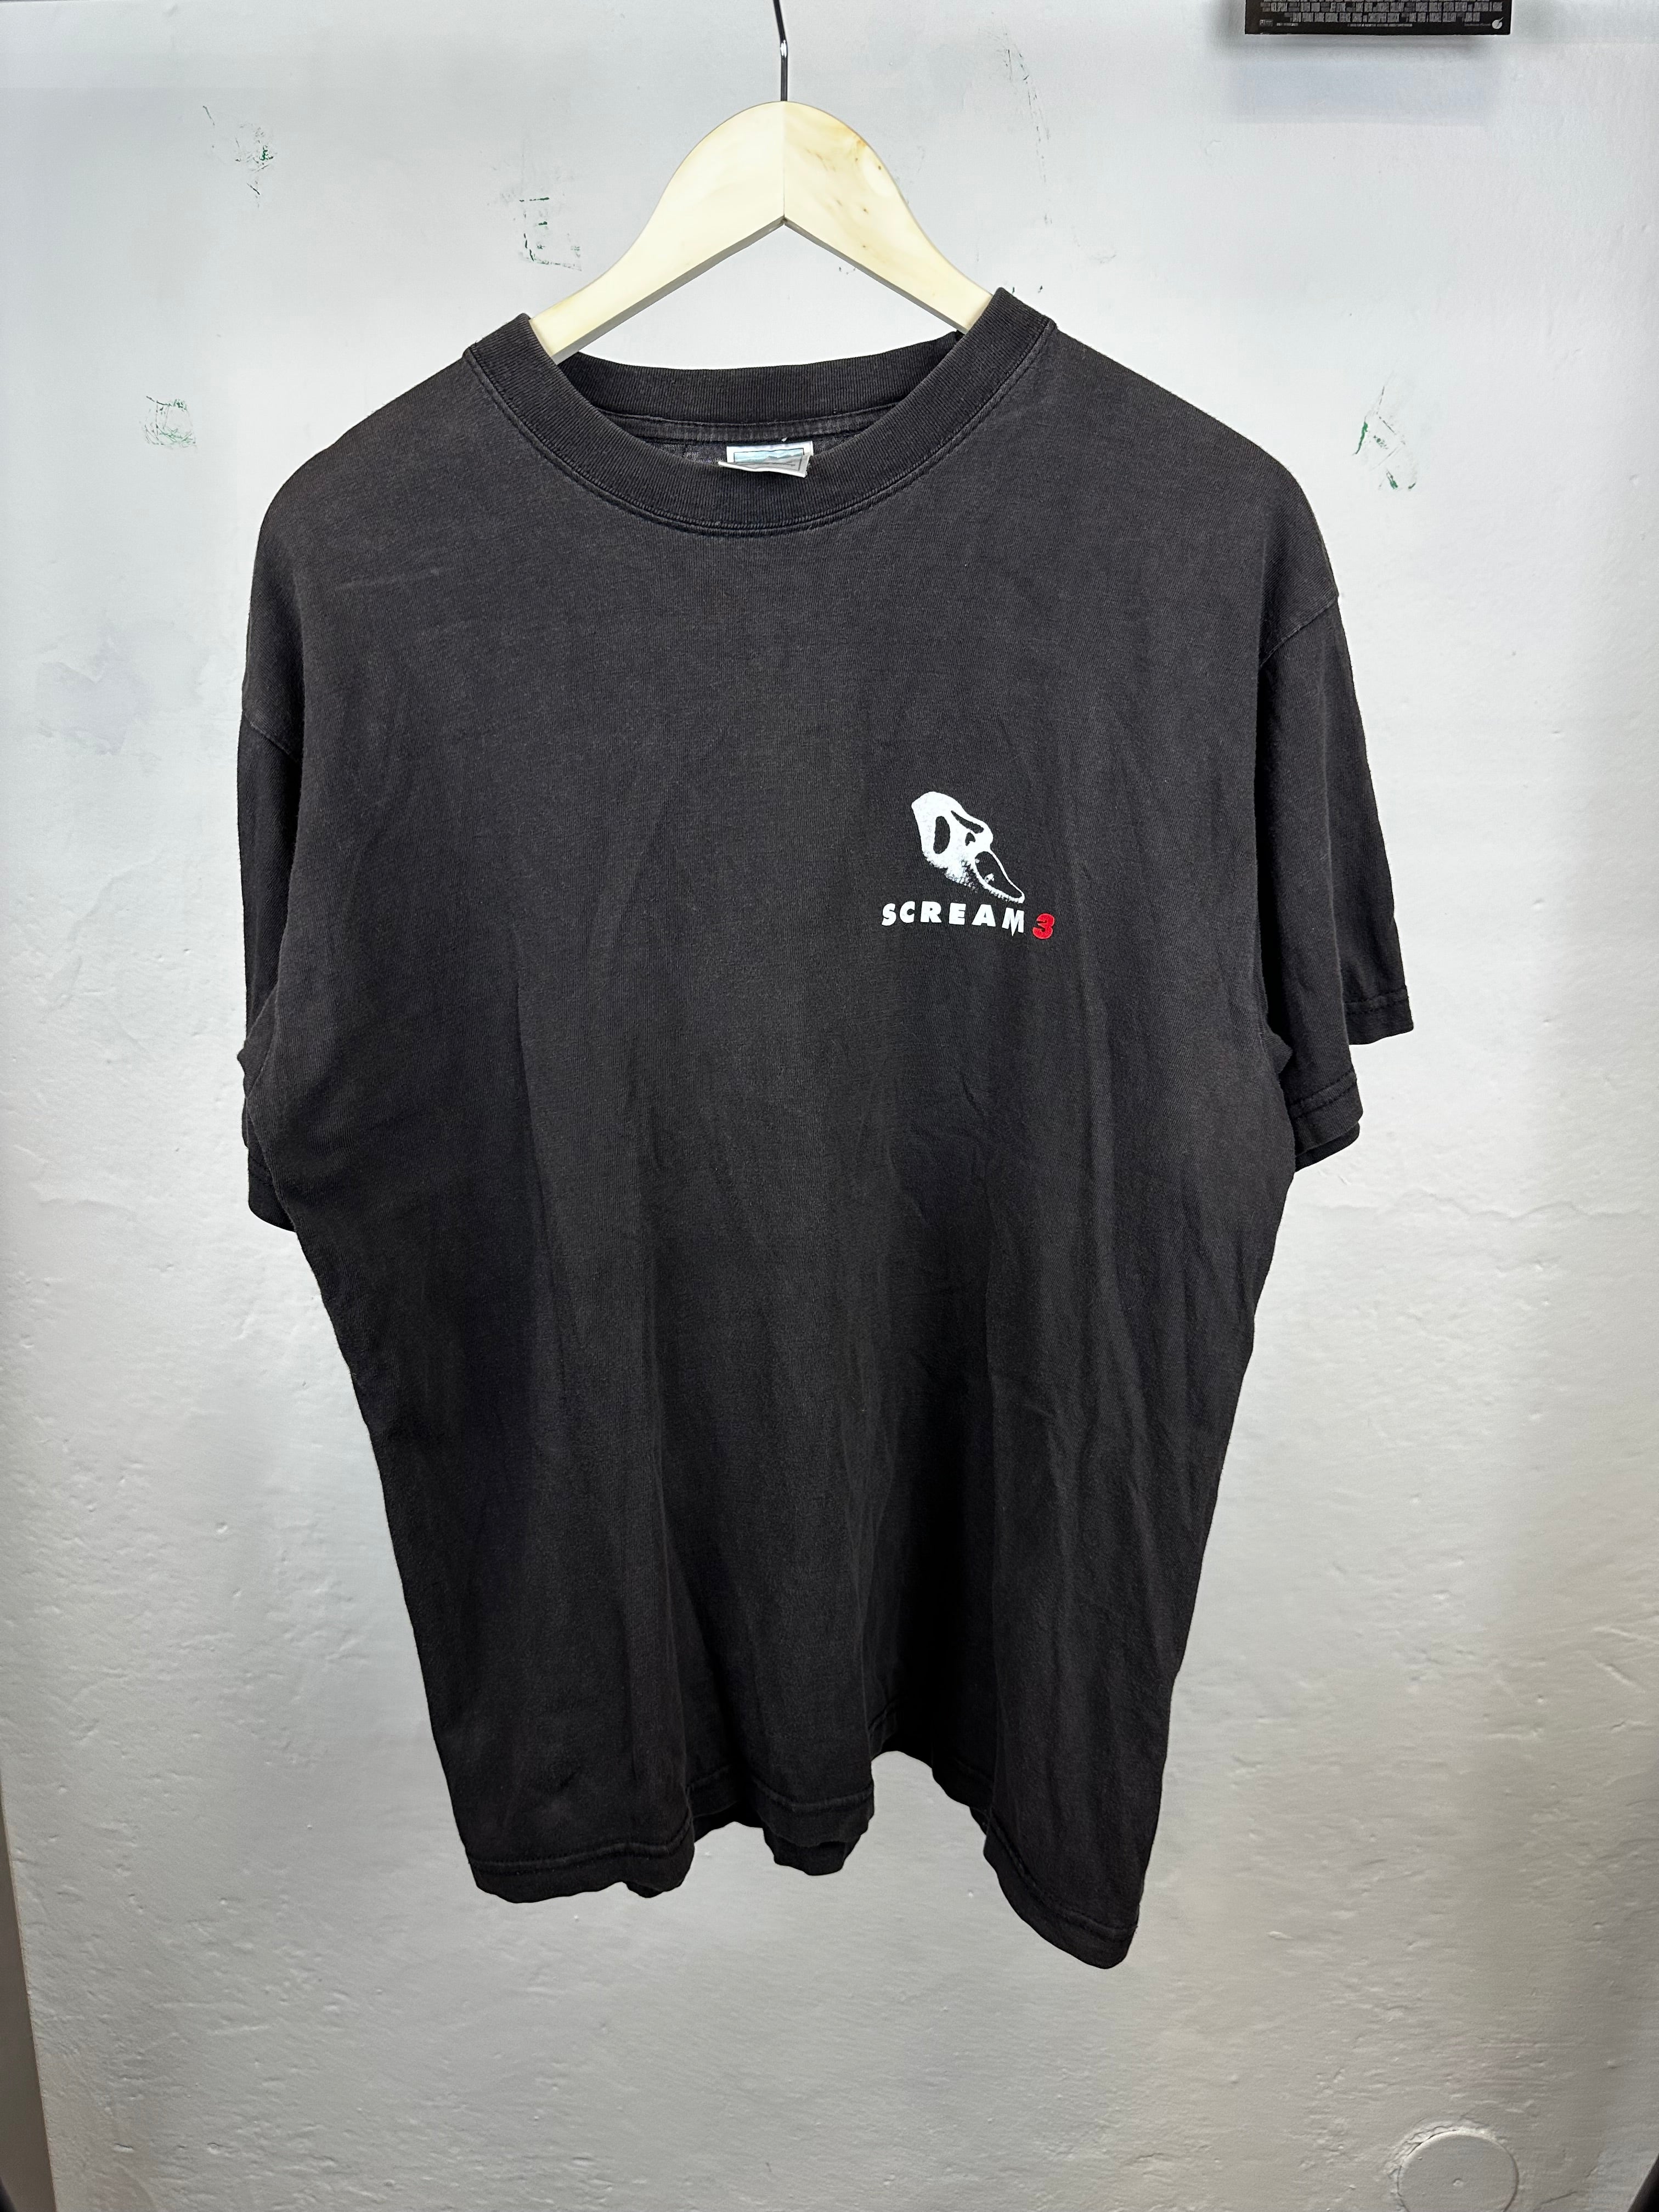 Vintage Scream 3 t-shirt - size M